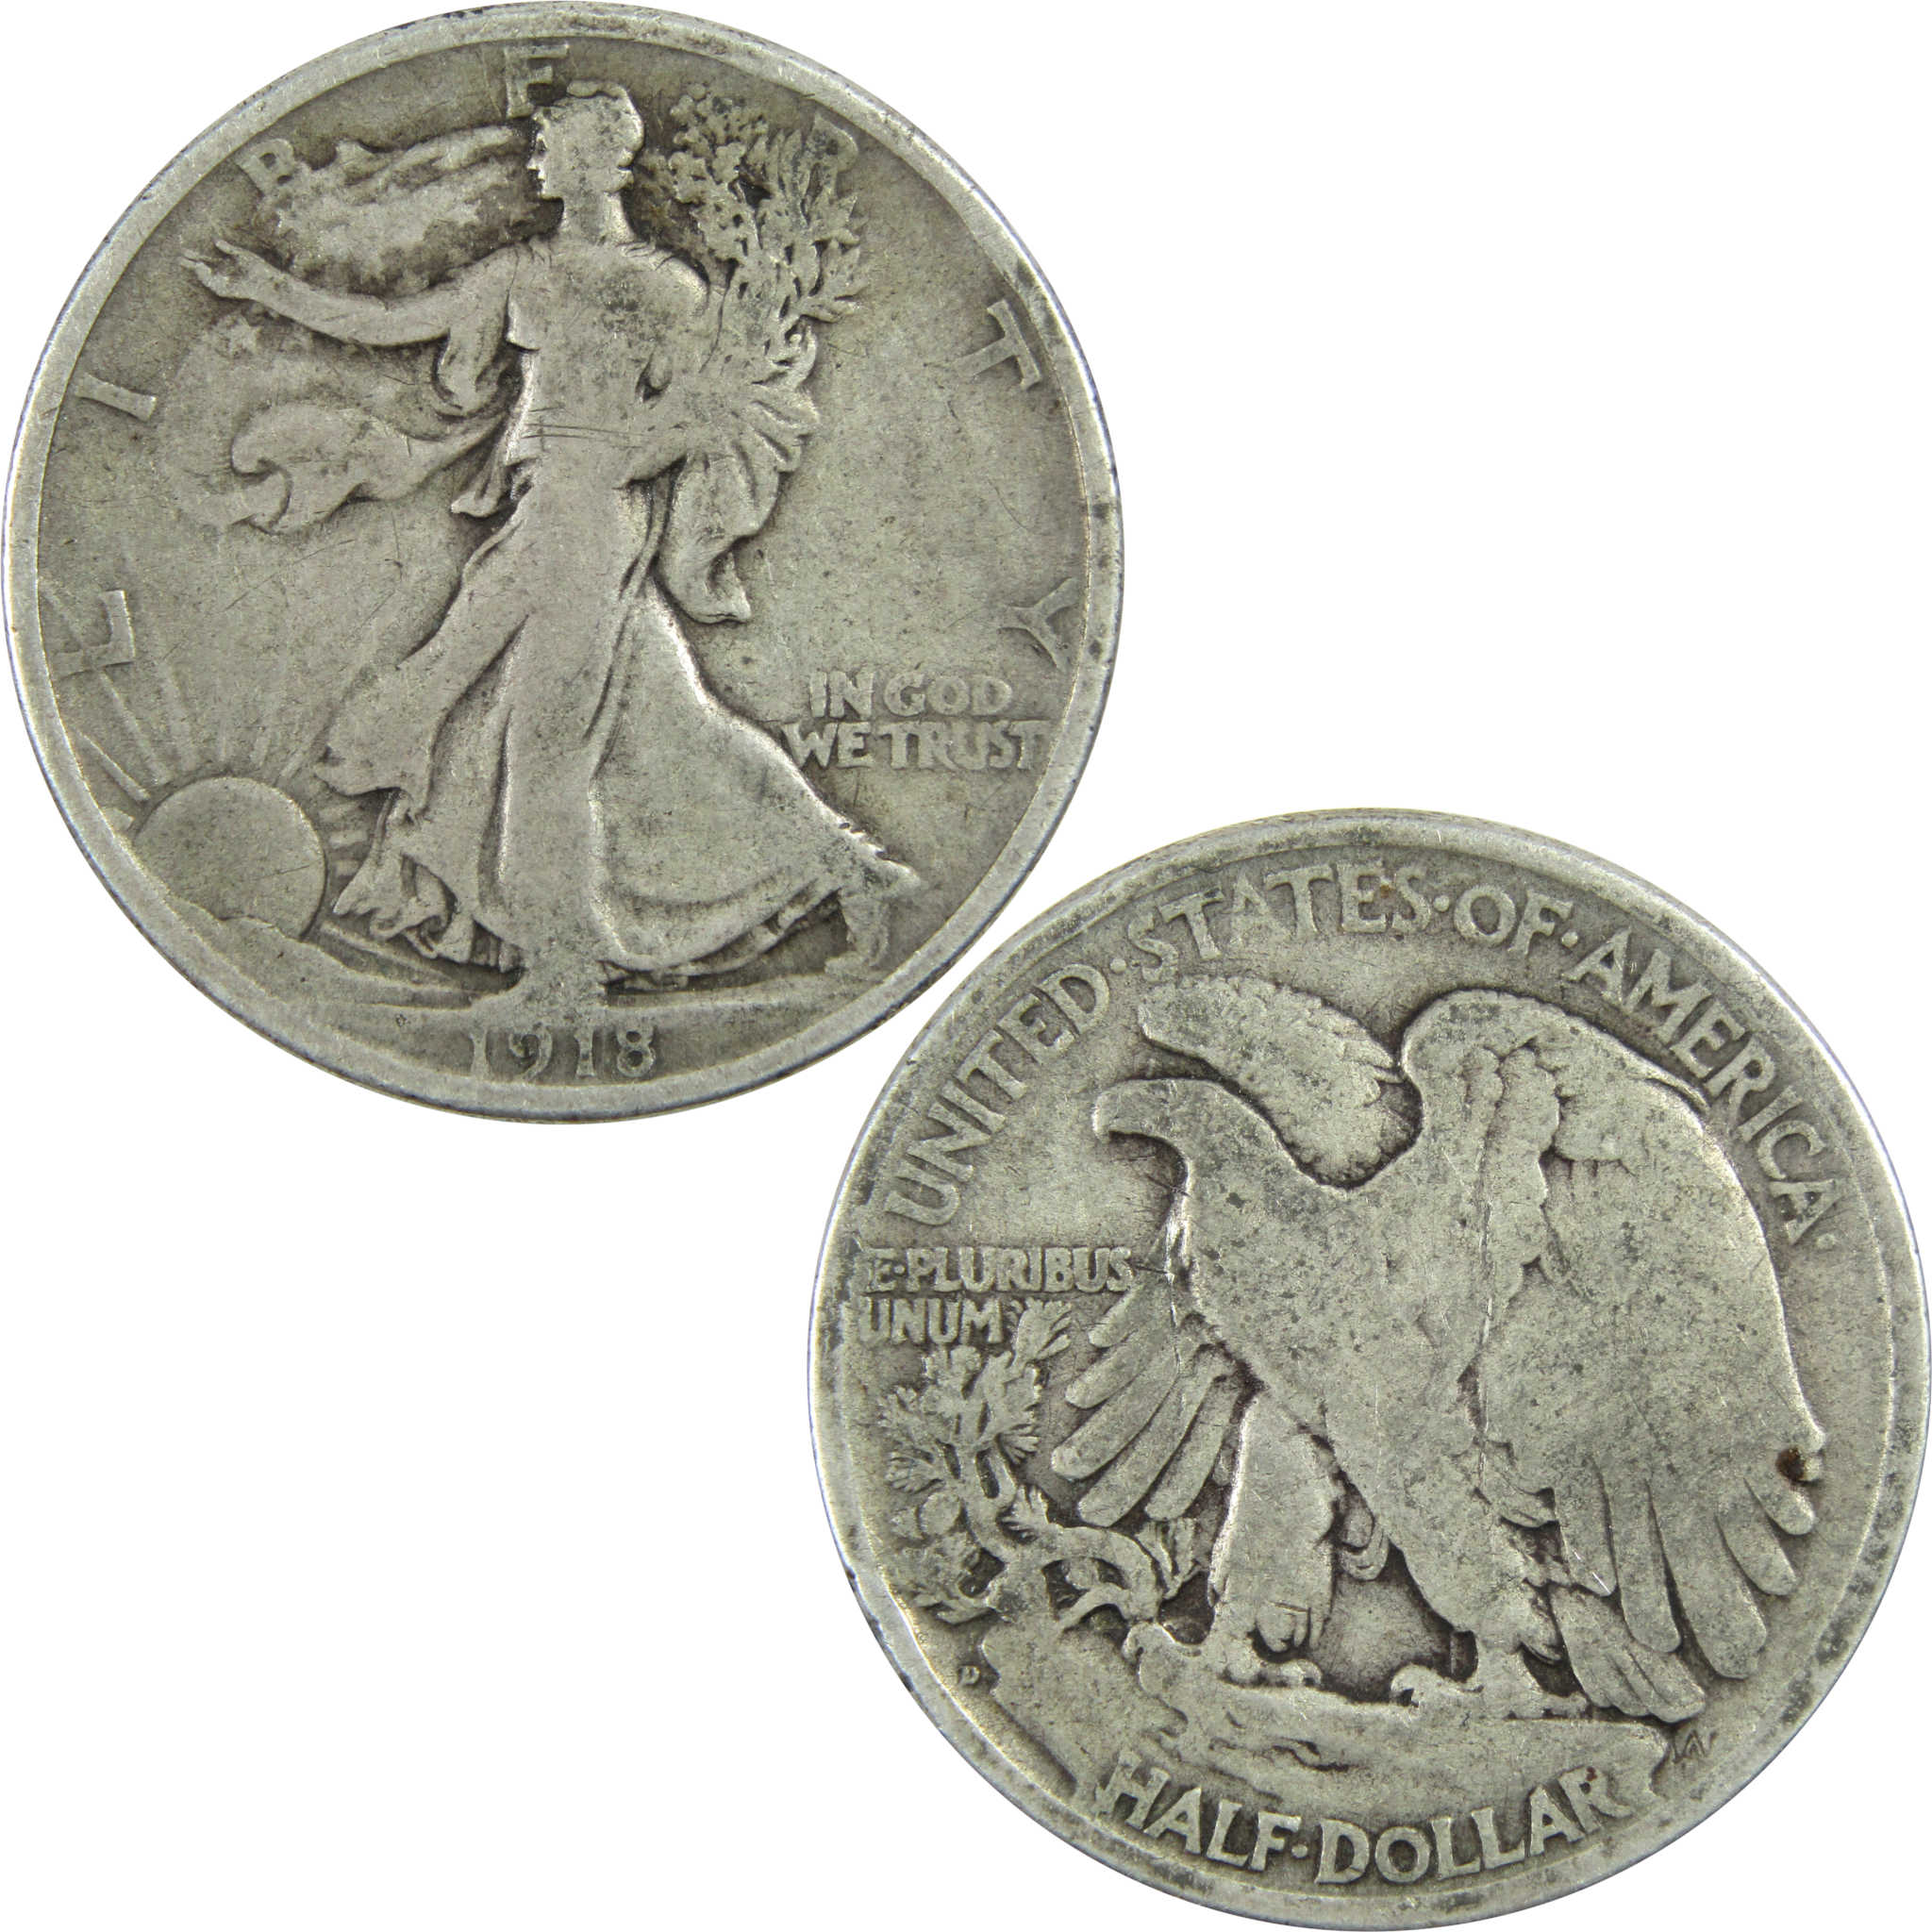 1918 D Liberty Walking Half Dollar VG Silver 50c Coin SKU:I13493